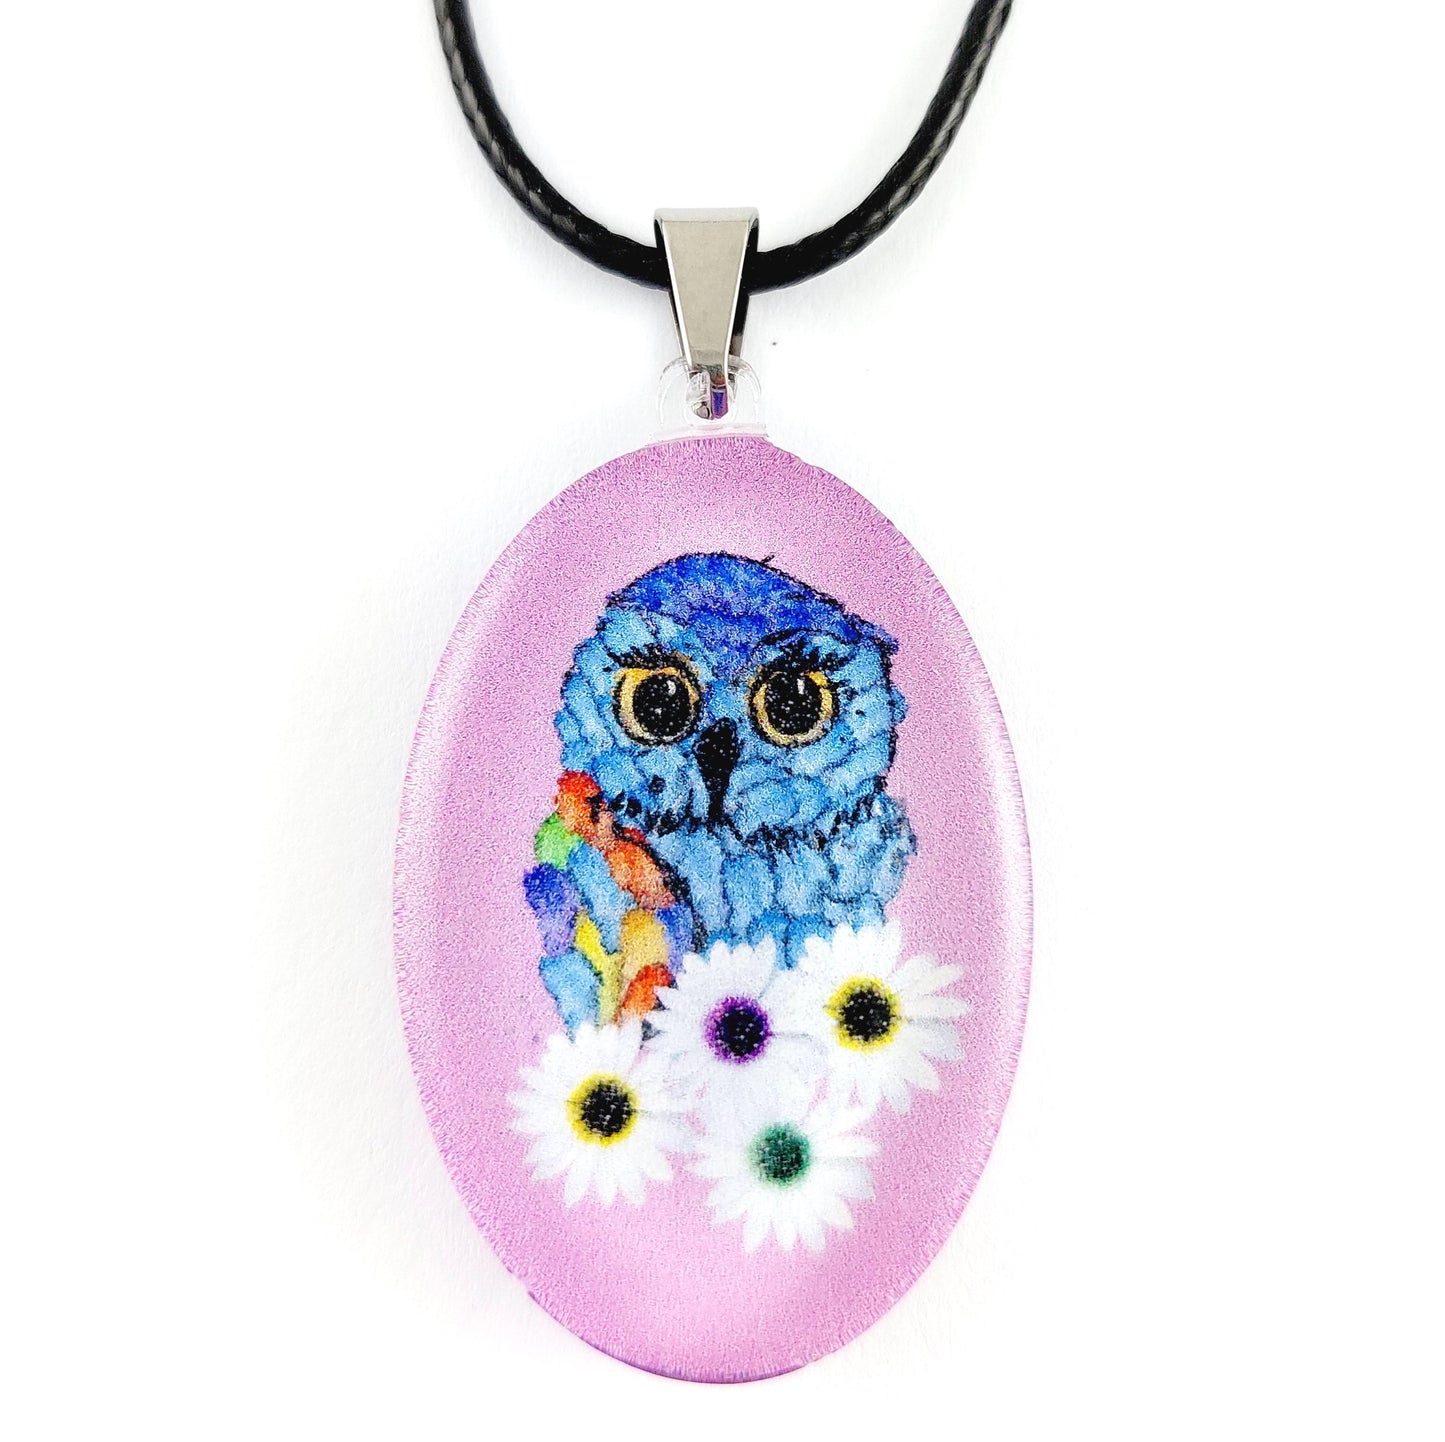 Pink Owl Pendant & Earring Set